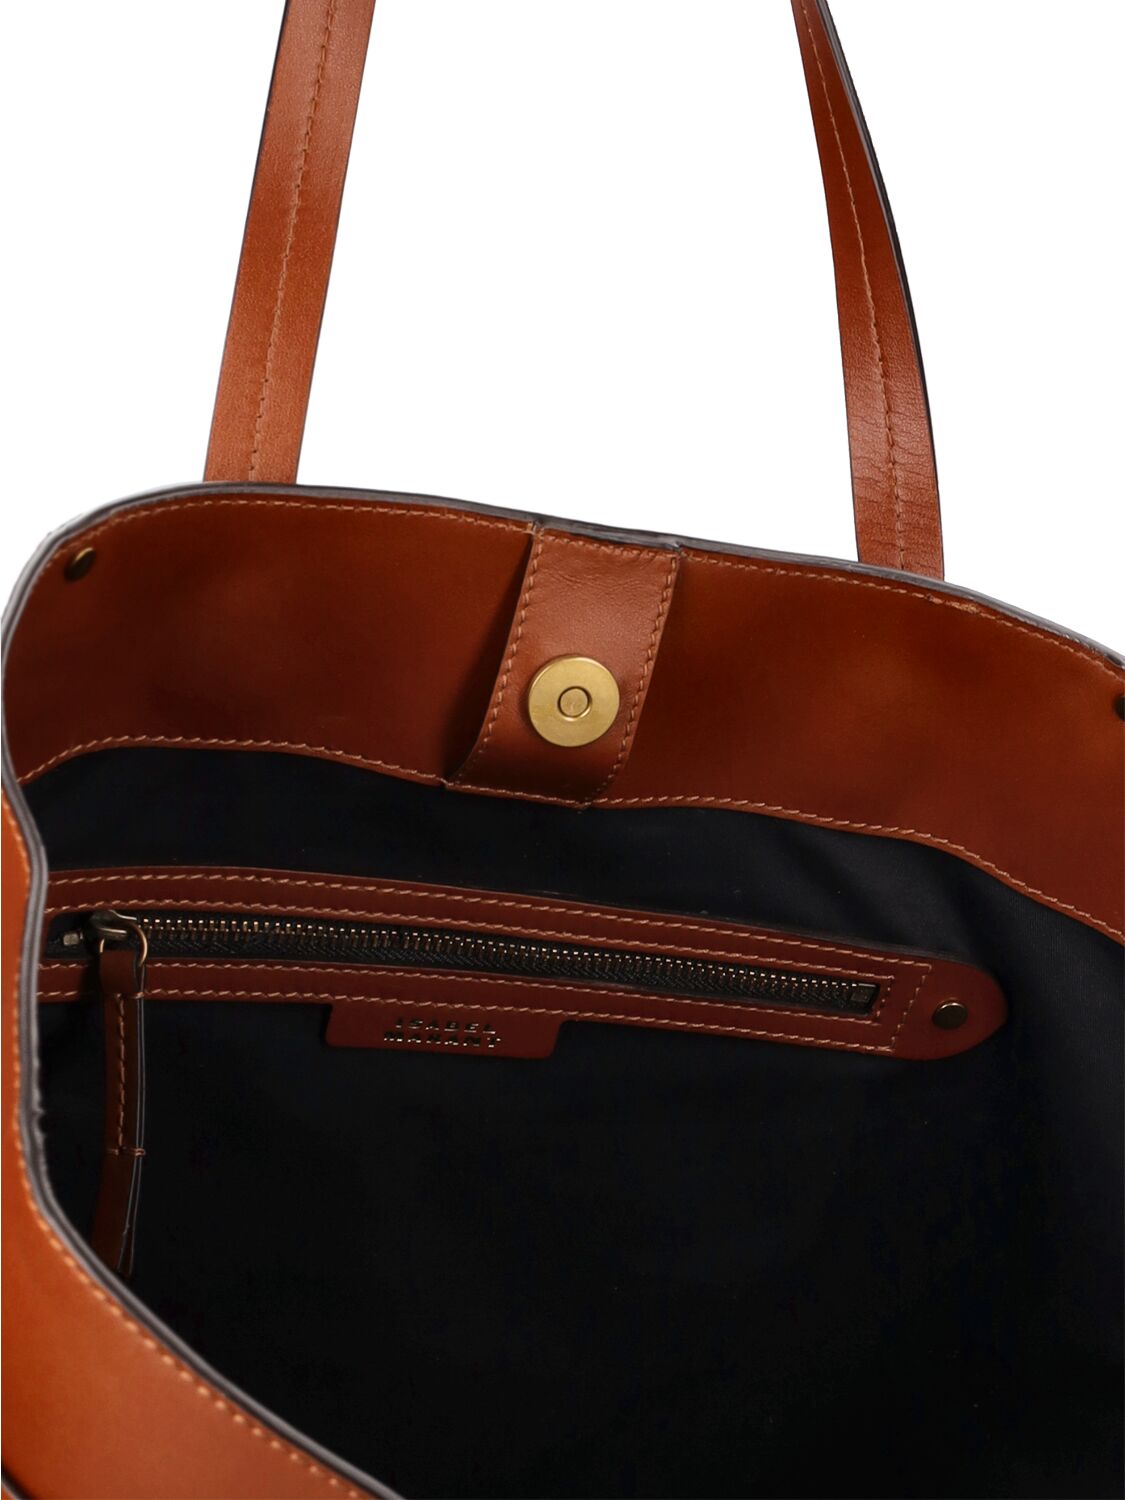 Shop Isabel Marant Oskan Studded Leather Tote Bag In Cognac